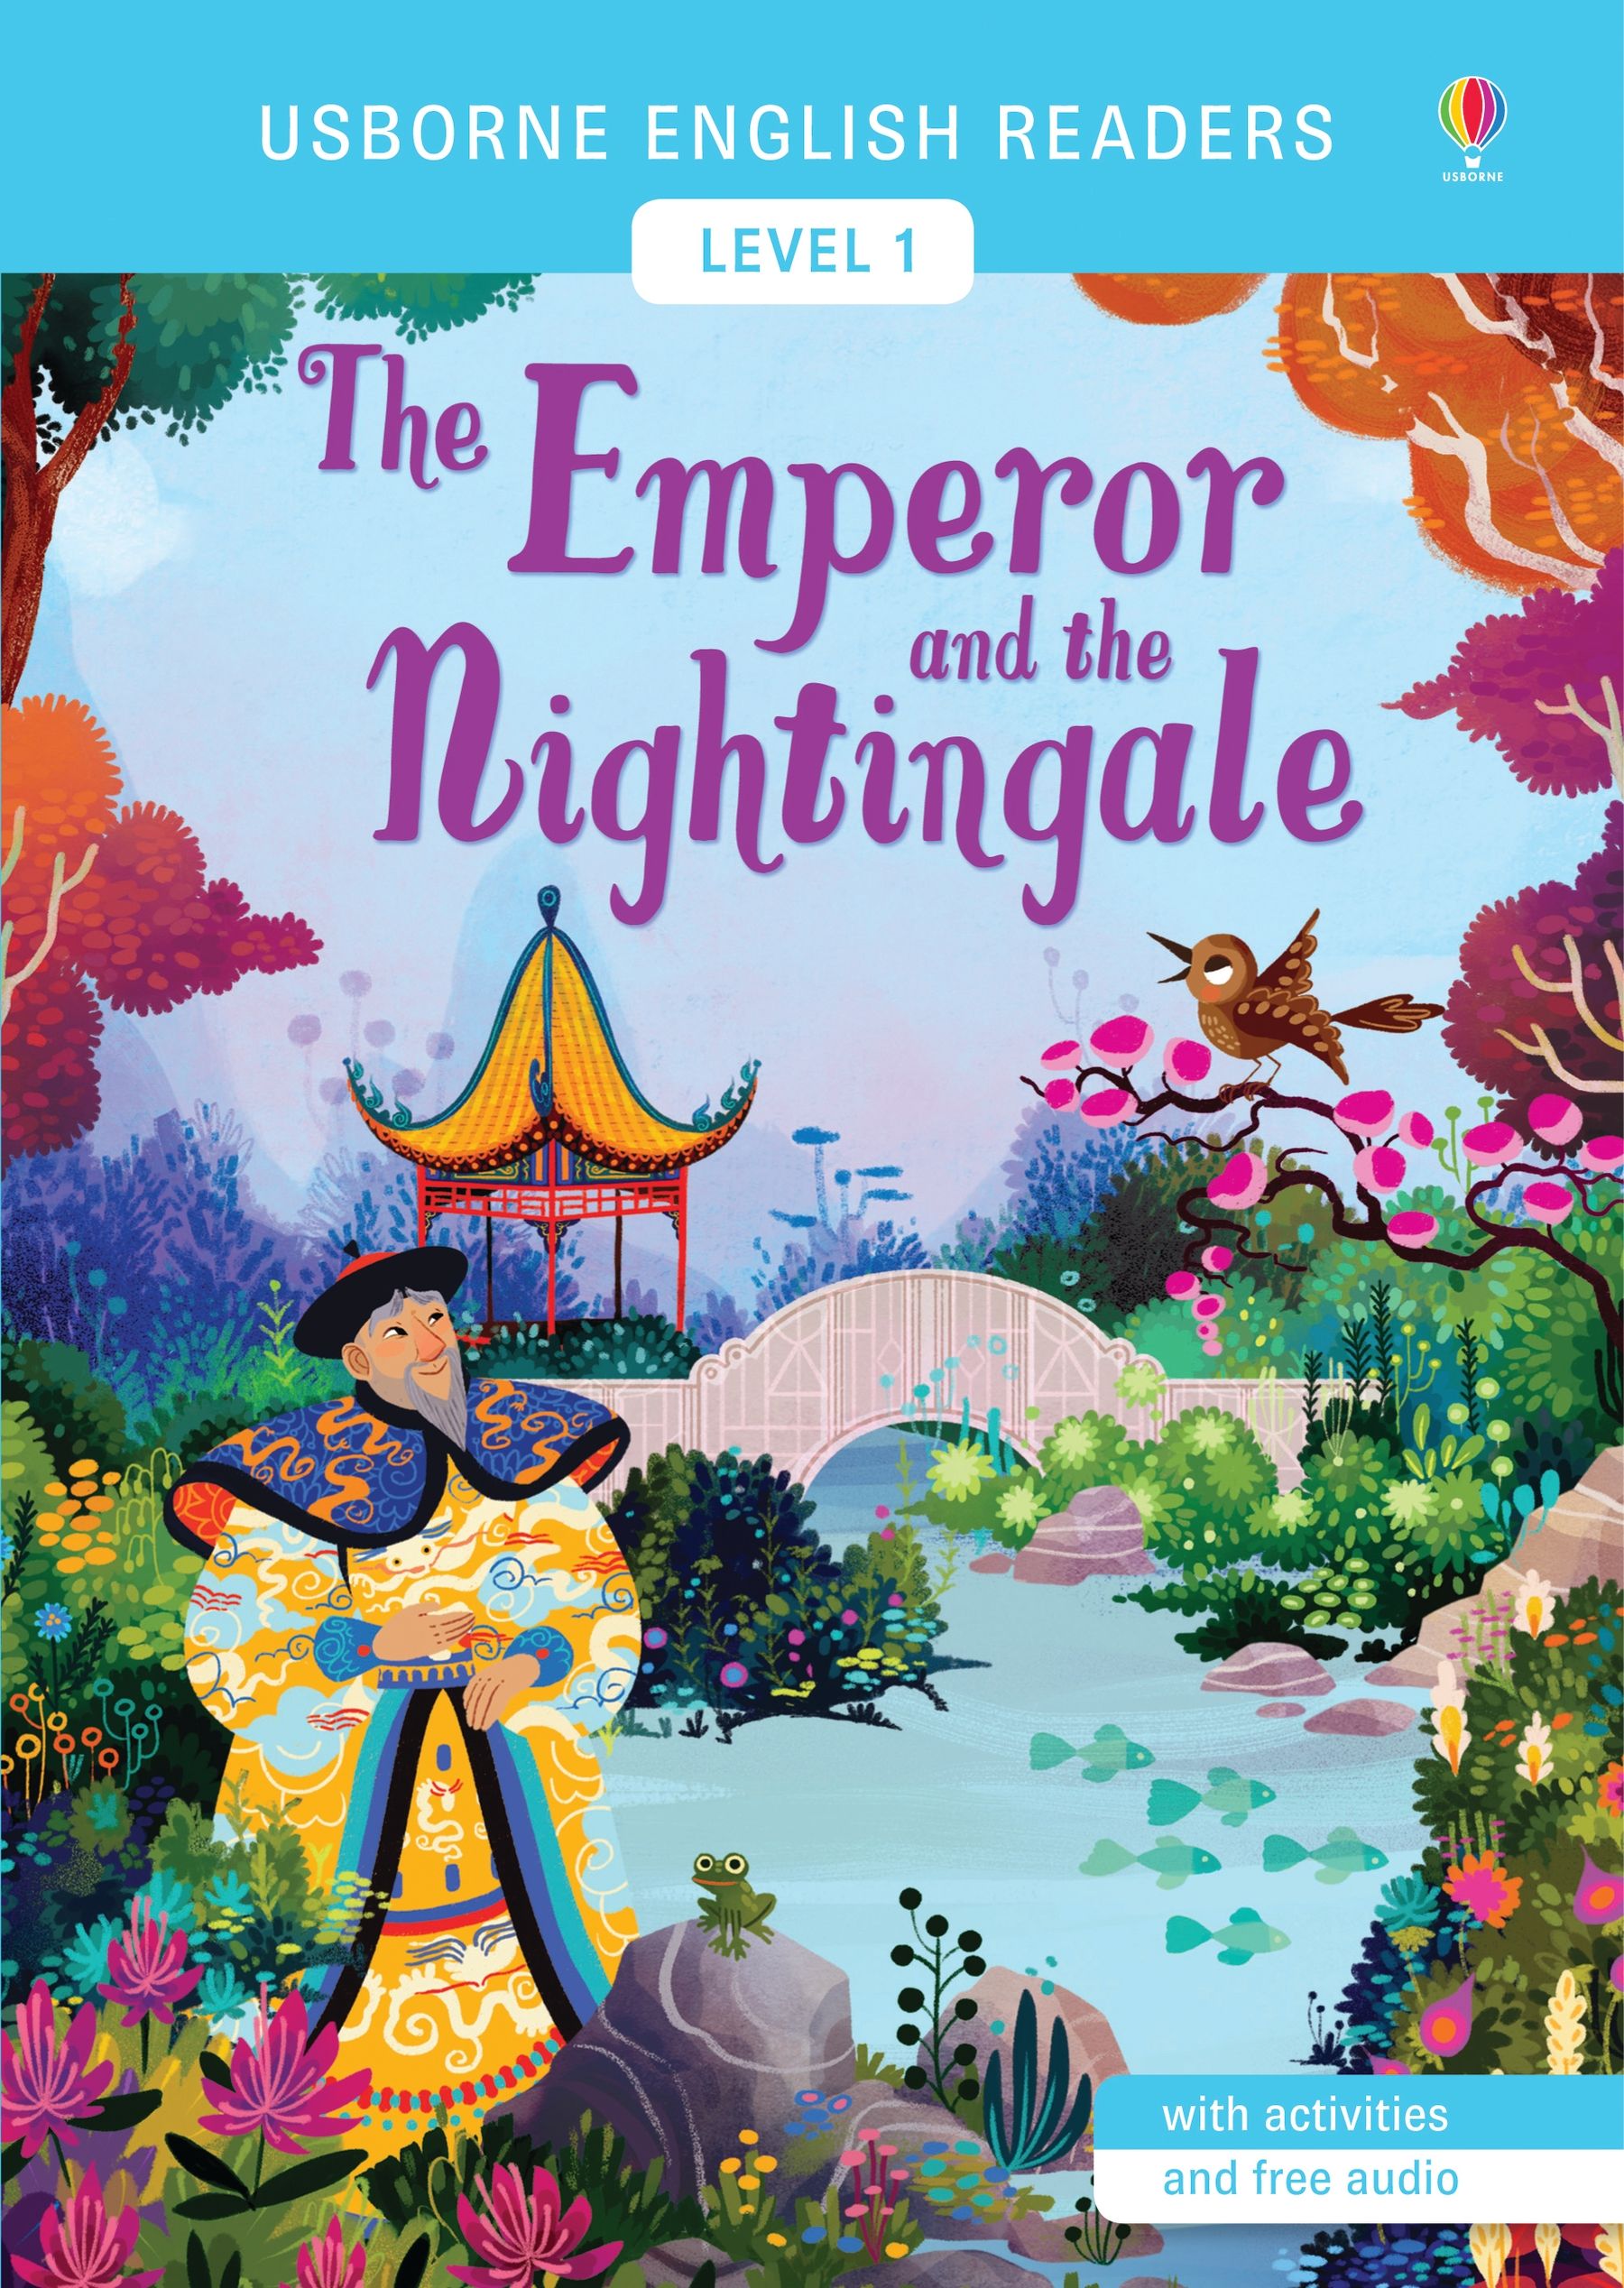 Usborne English Reading: The Emperor and the Nightingale